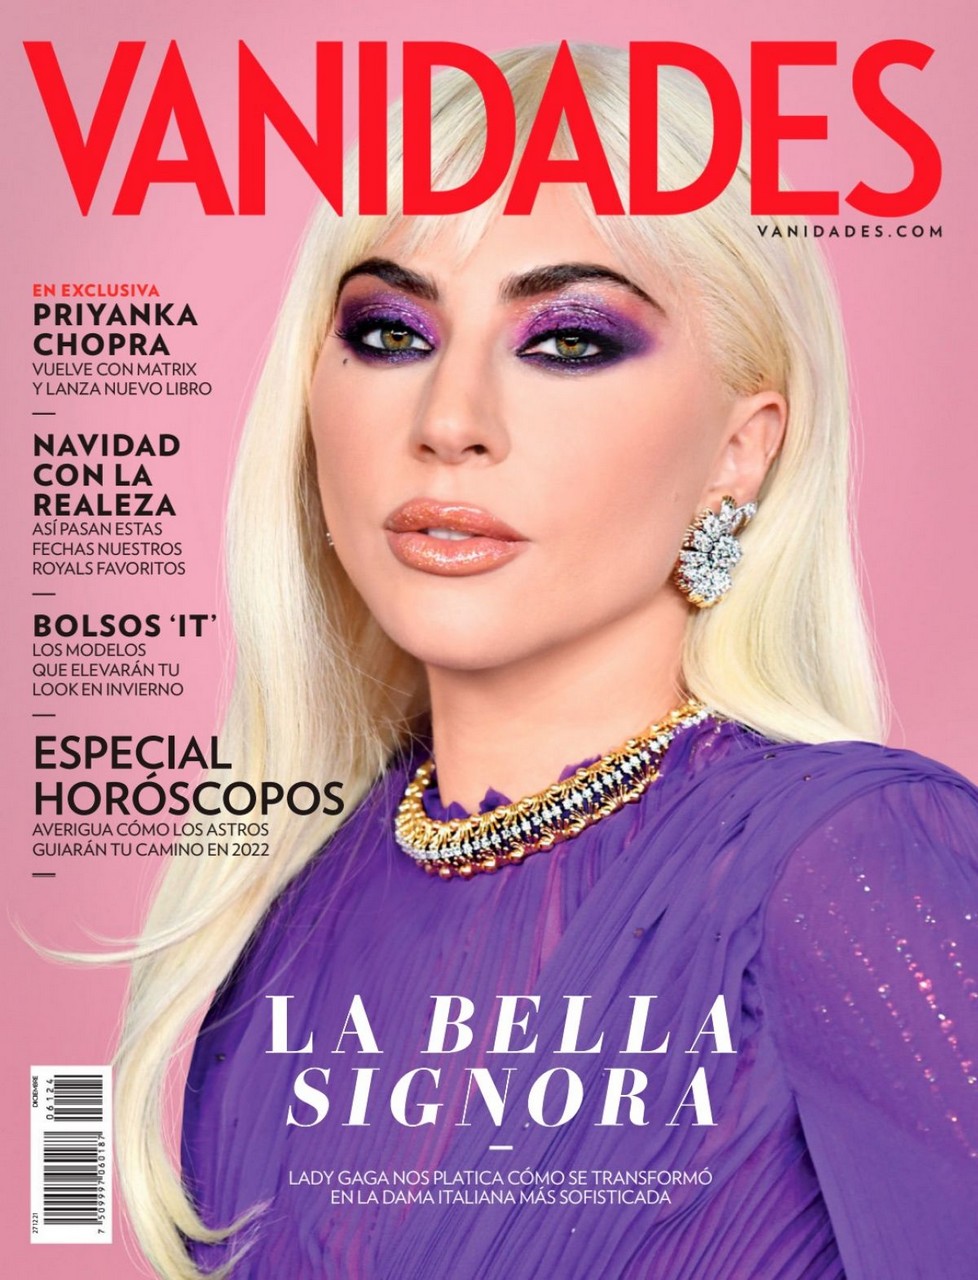 Lady Gaga Vanidades Magazine December